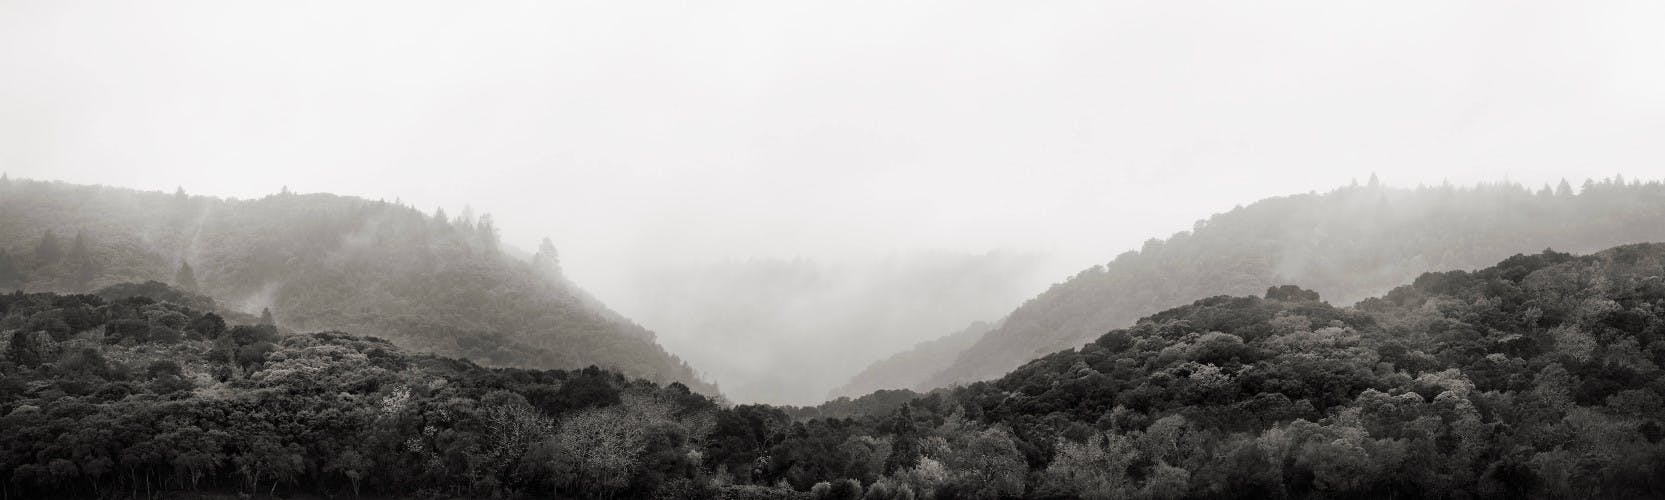 promontory fog panorama